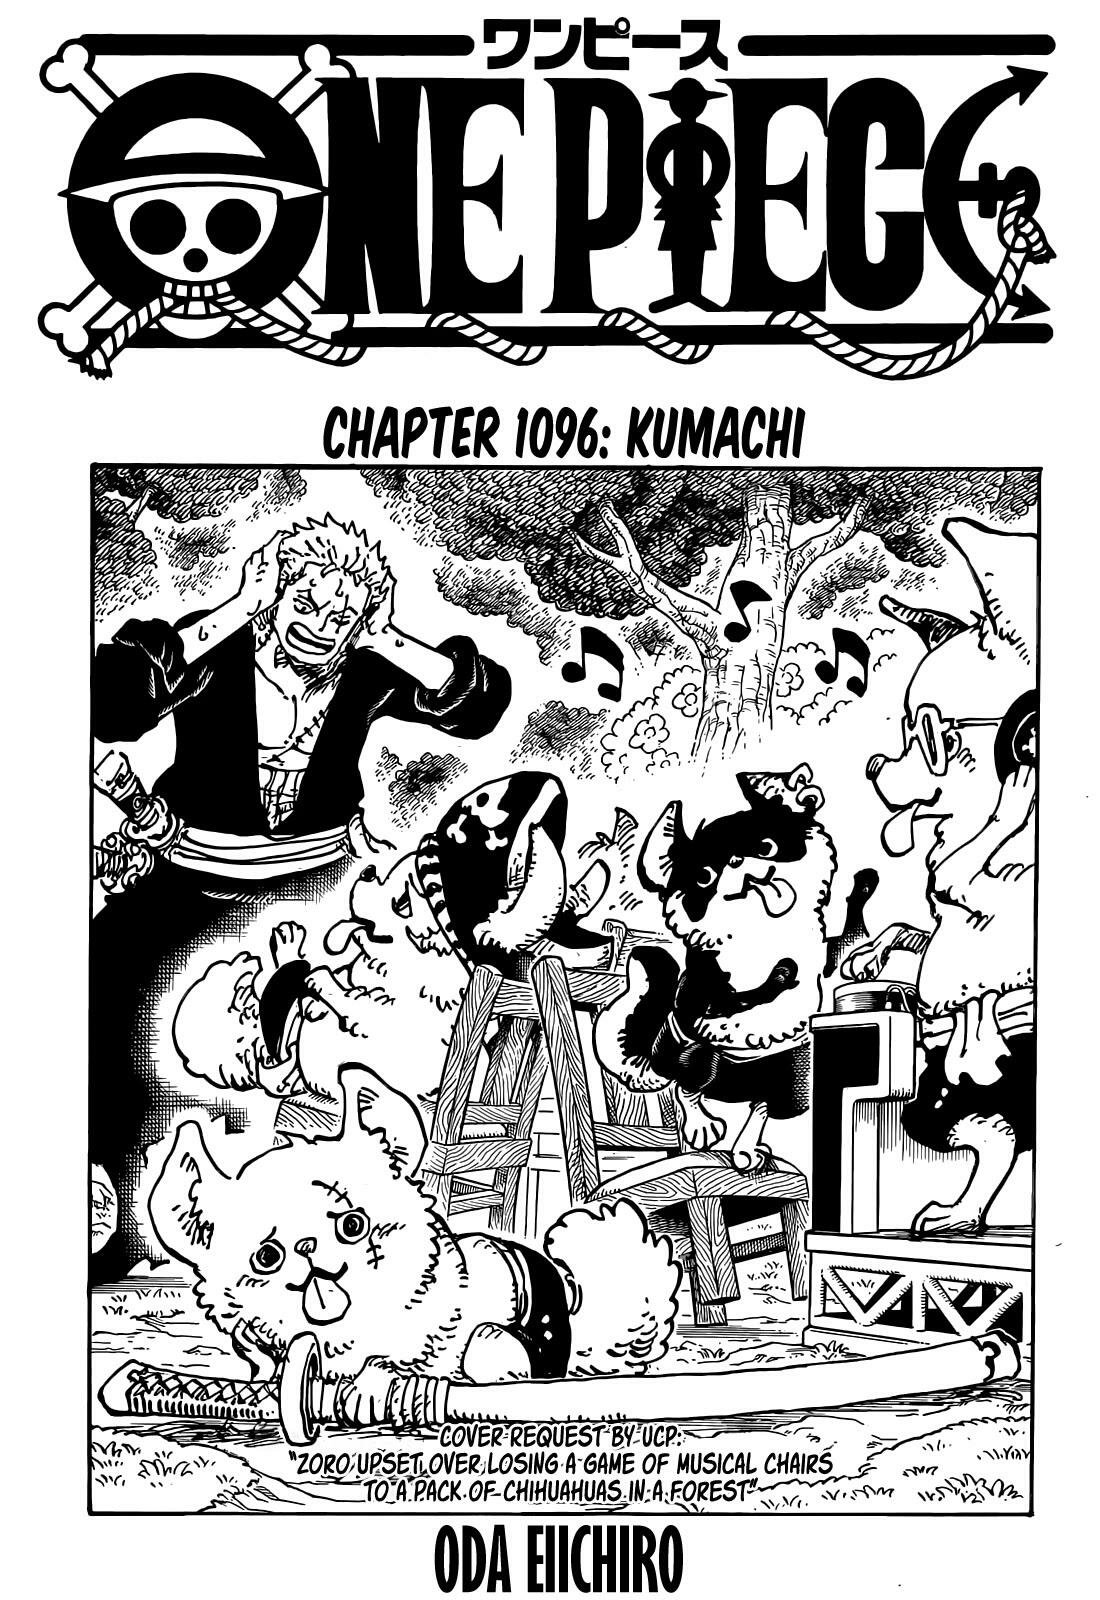 Chapter - One Piece Chapter 1065 Spoiler Pics & Summaries